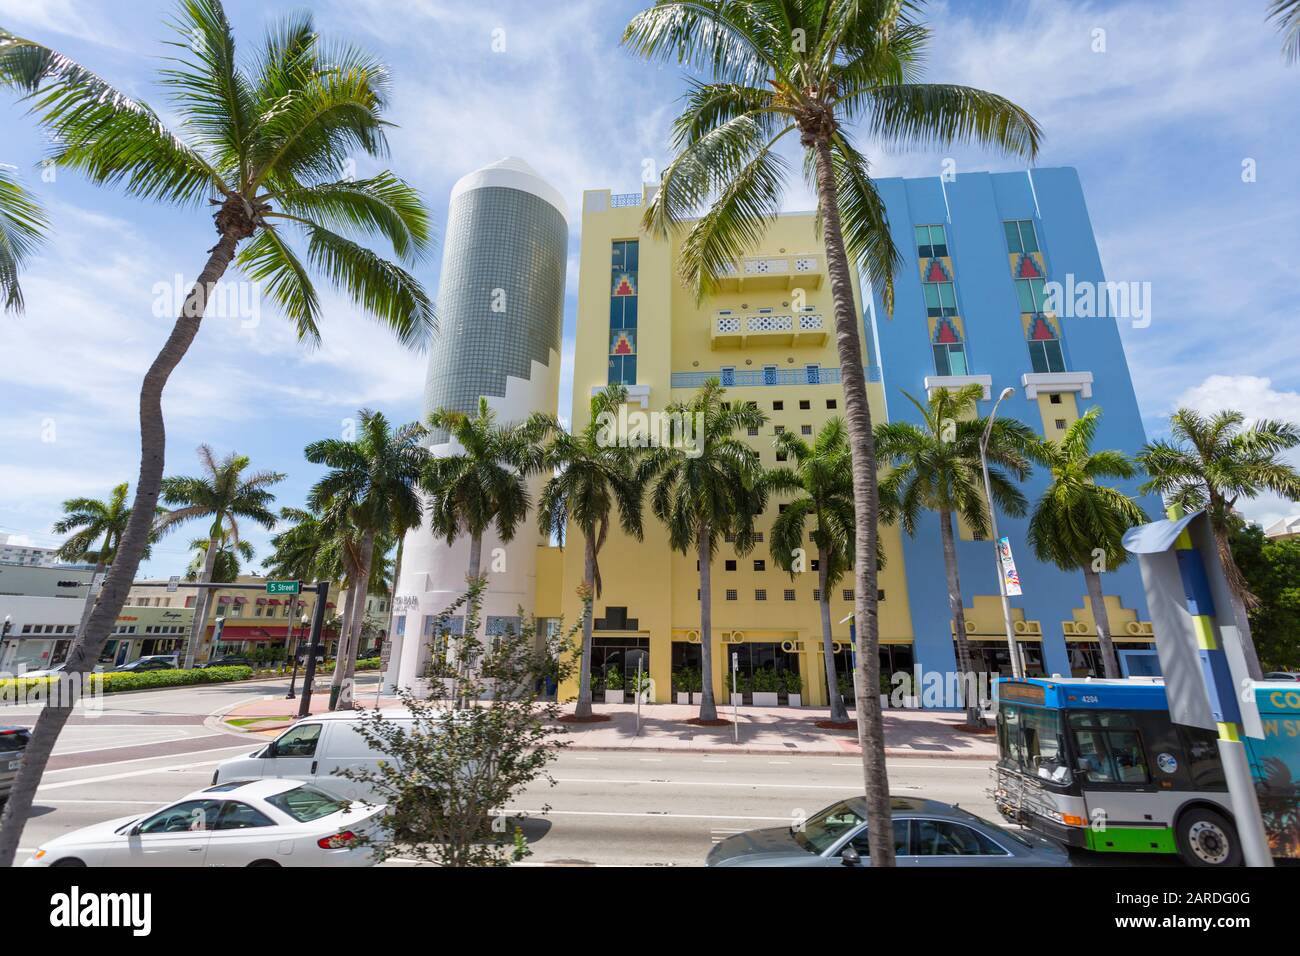 View of 5th Street & Washington Avenue buildings, South Beach, Miami